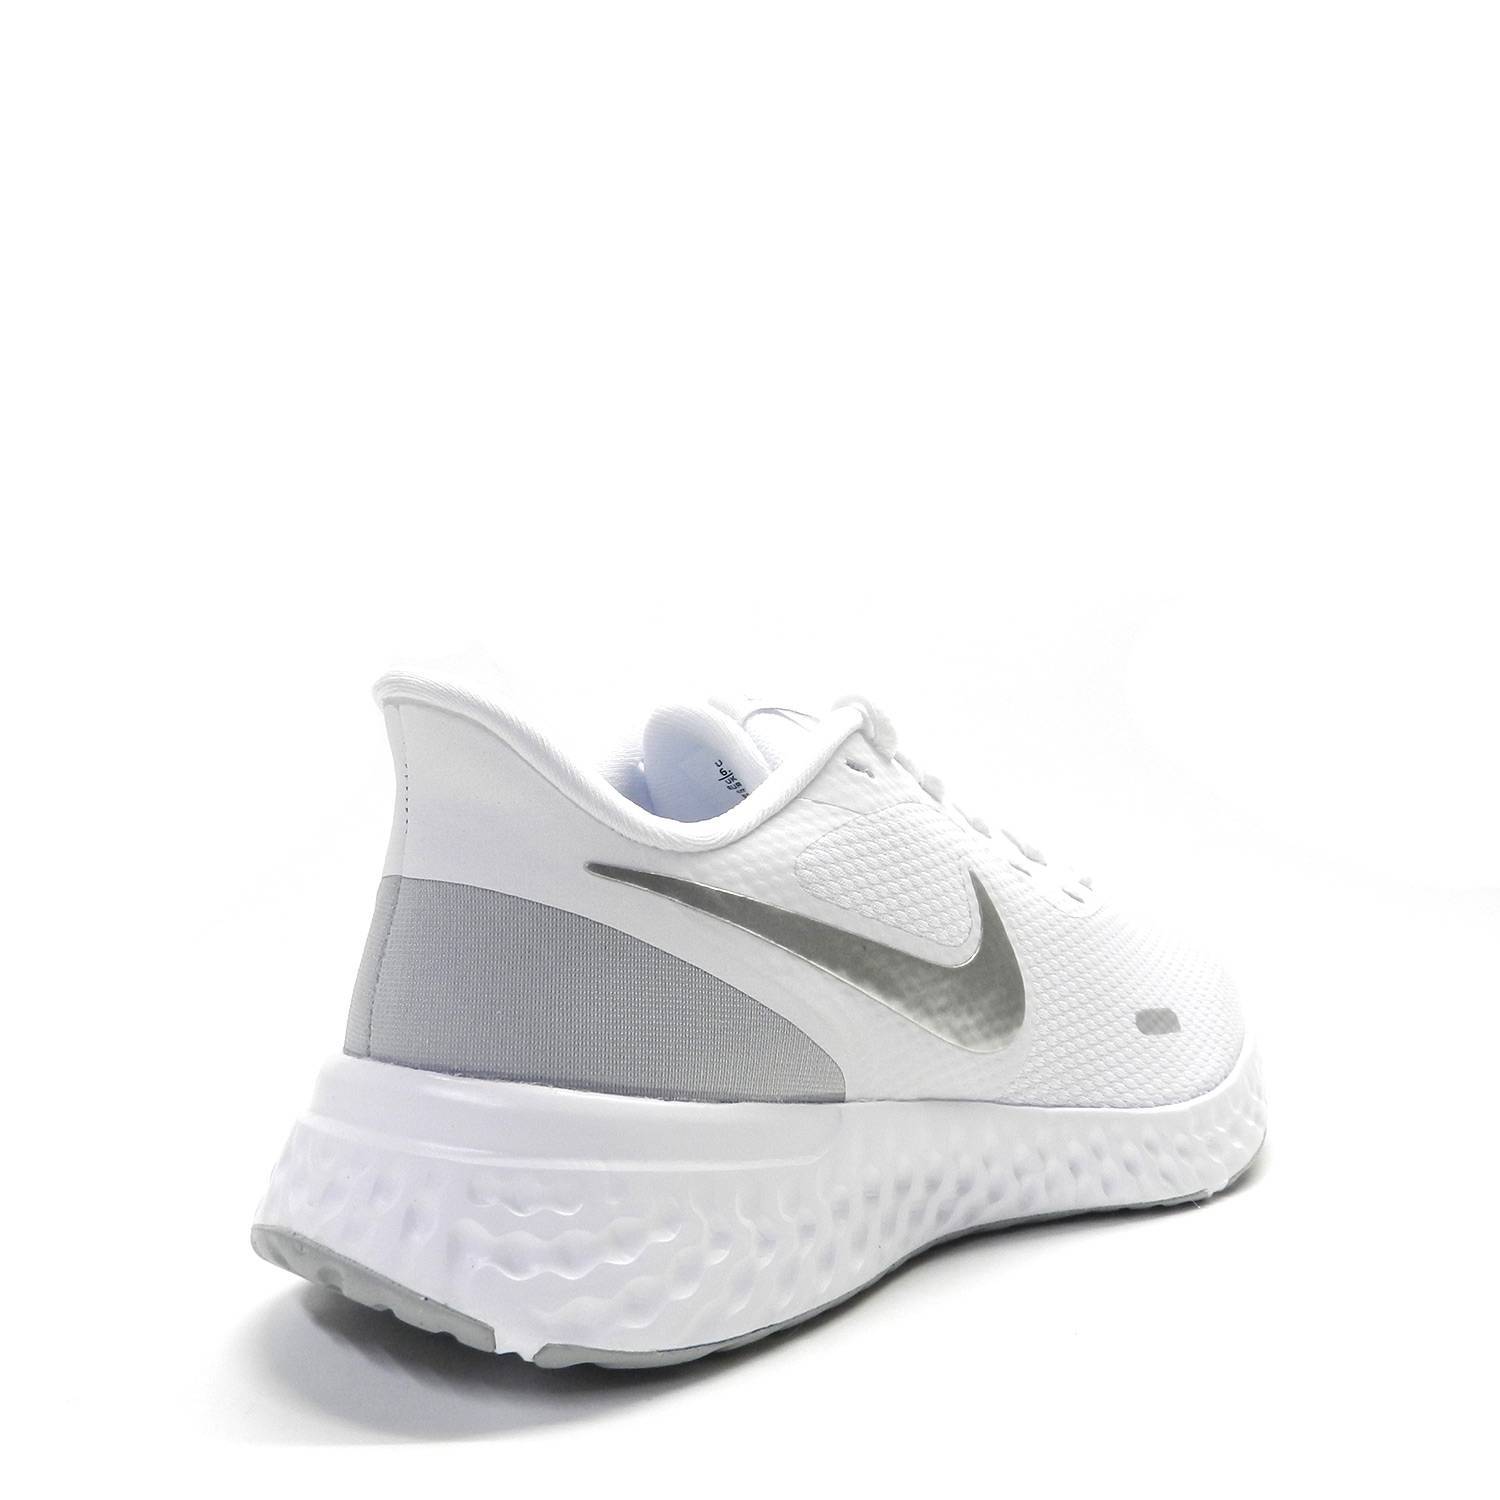 Zapatillas Nike Revolution 5 Blanco